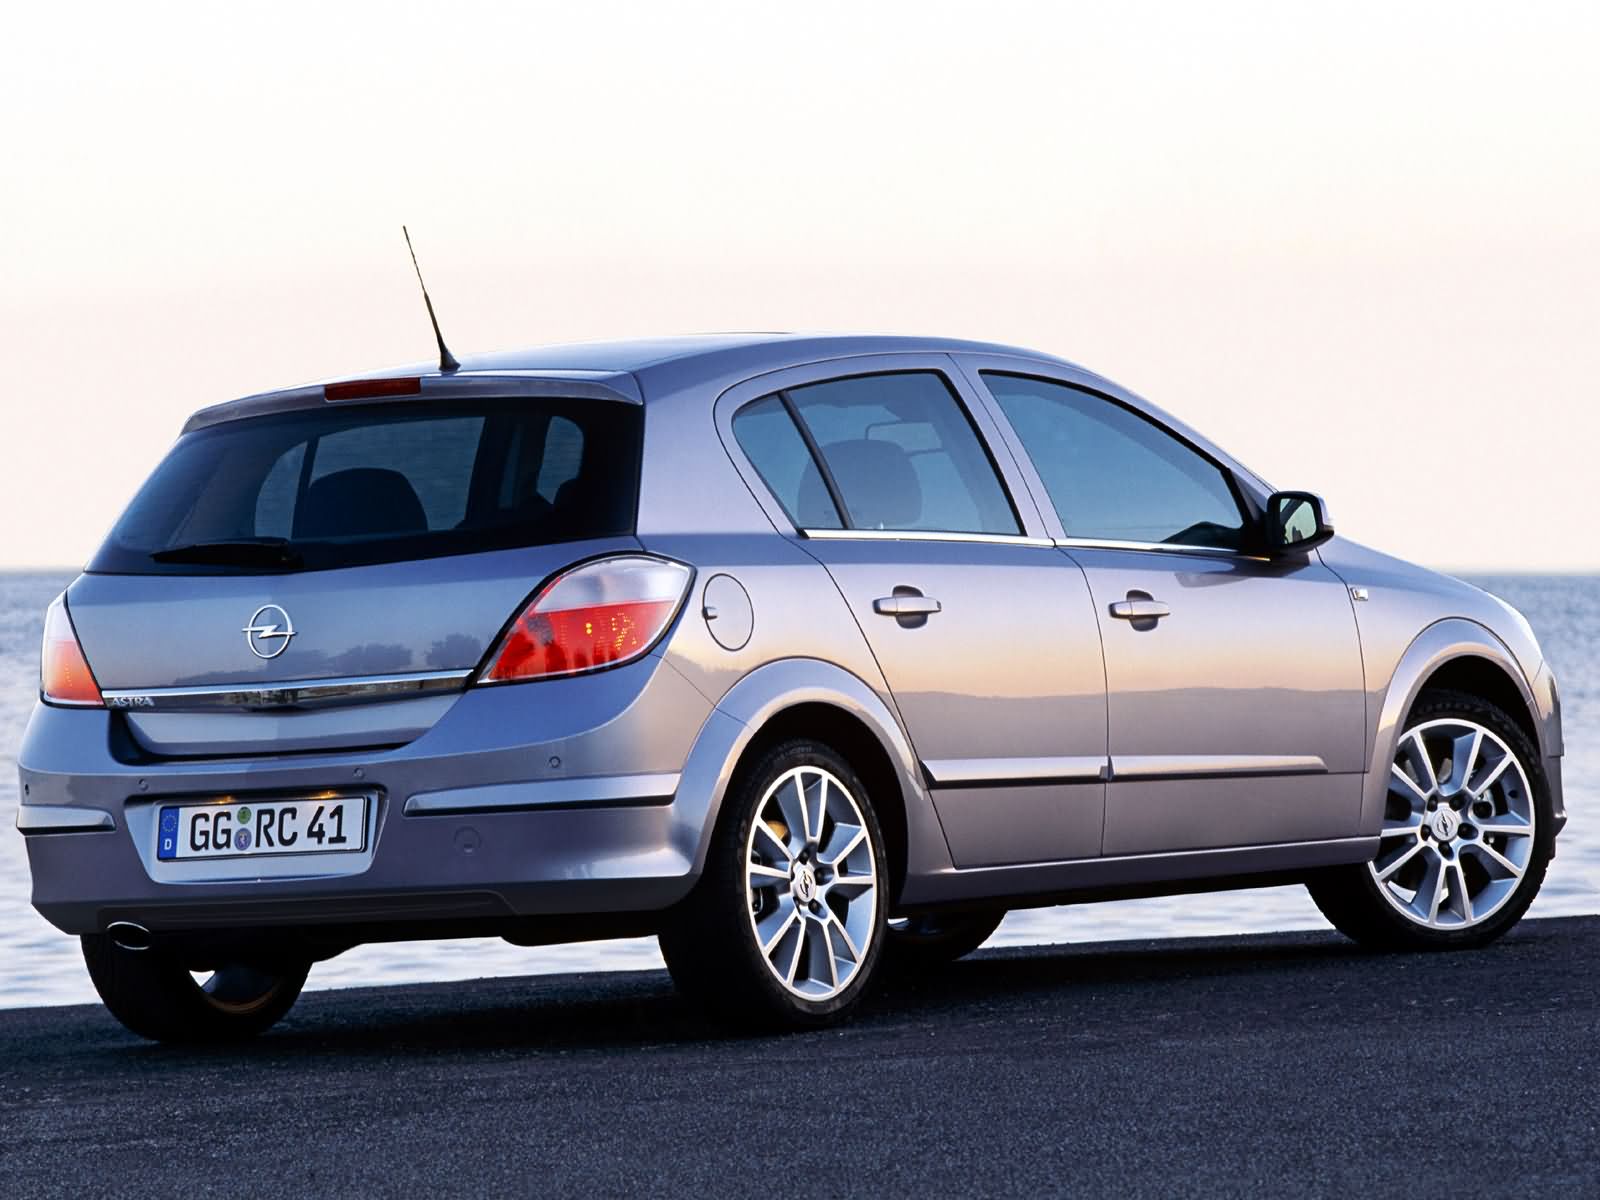 Astra 1.7 download. Opel Astra h 2004. Opel Astra h 2005. Opel Astra h (2004-2007).